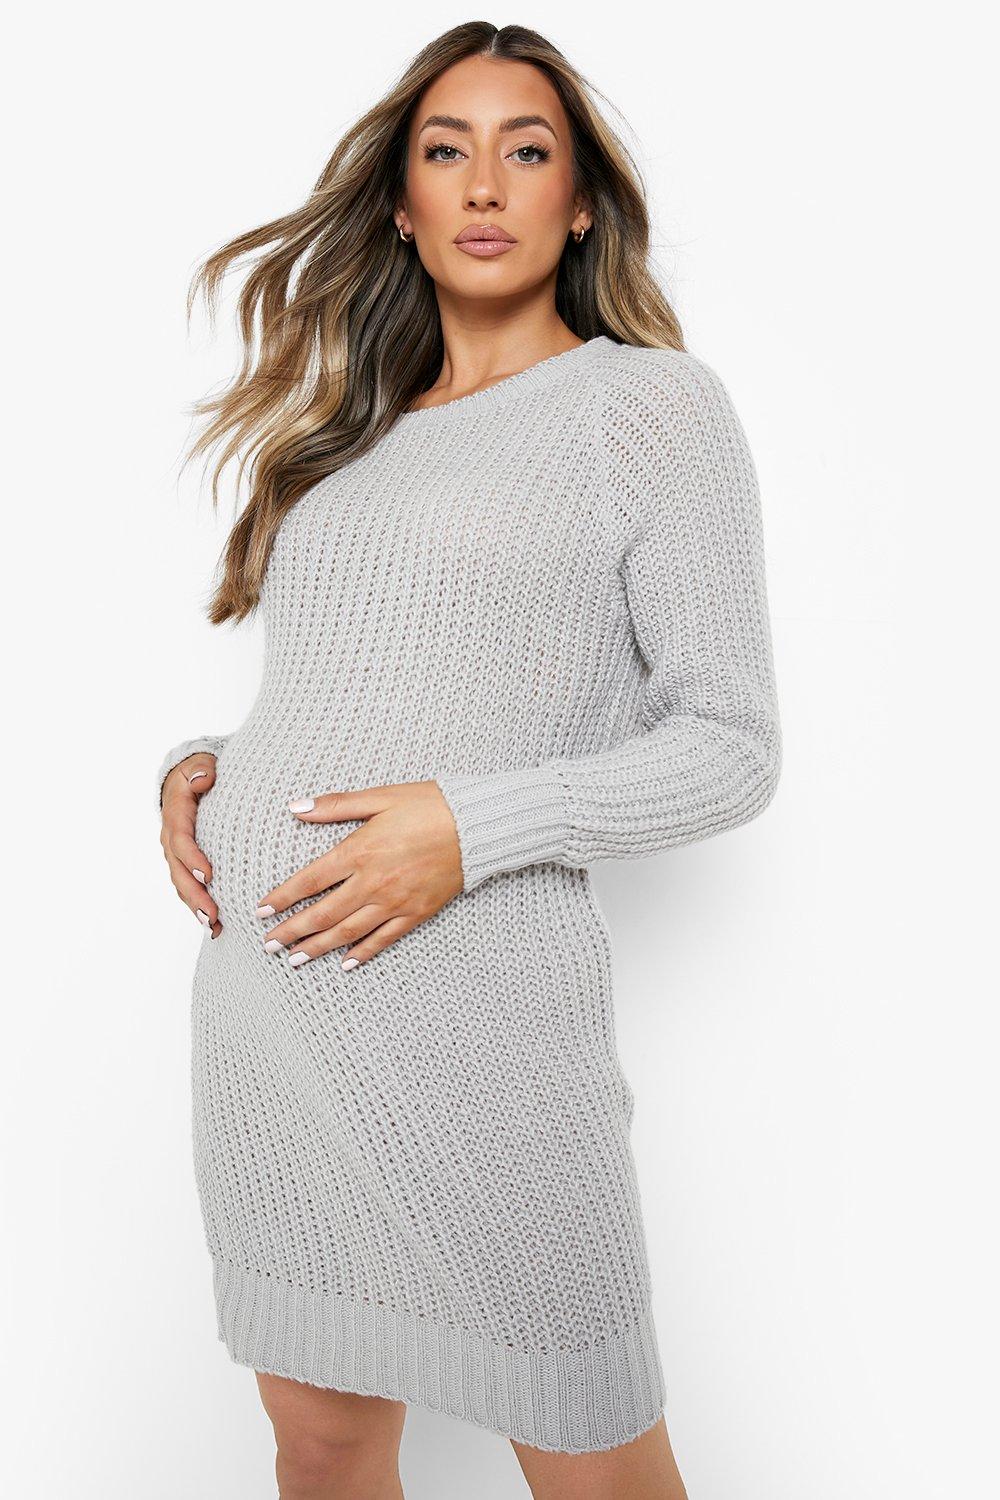 maternity jumper dress uk